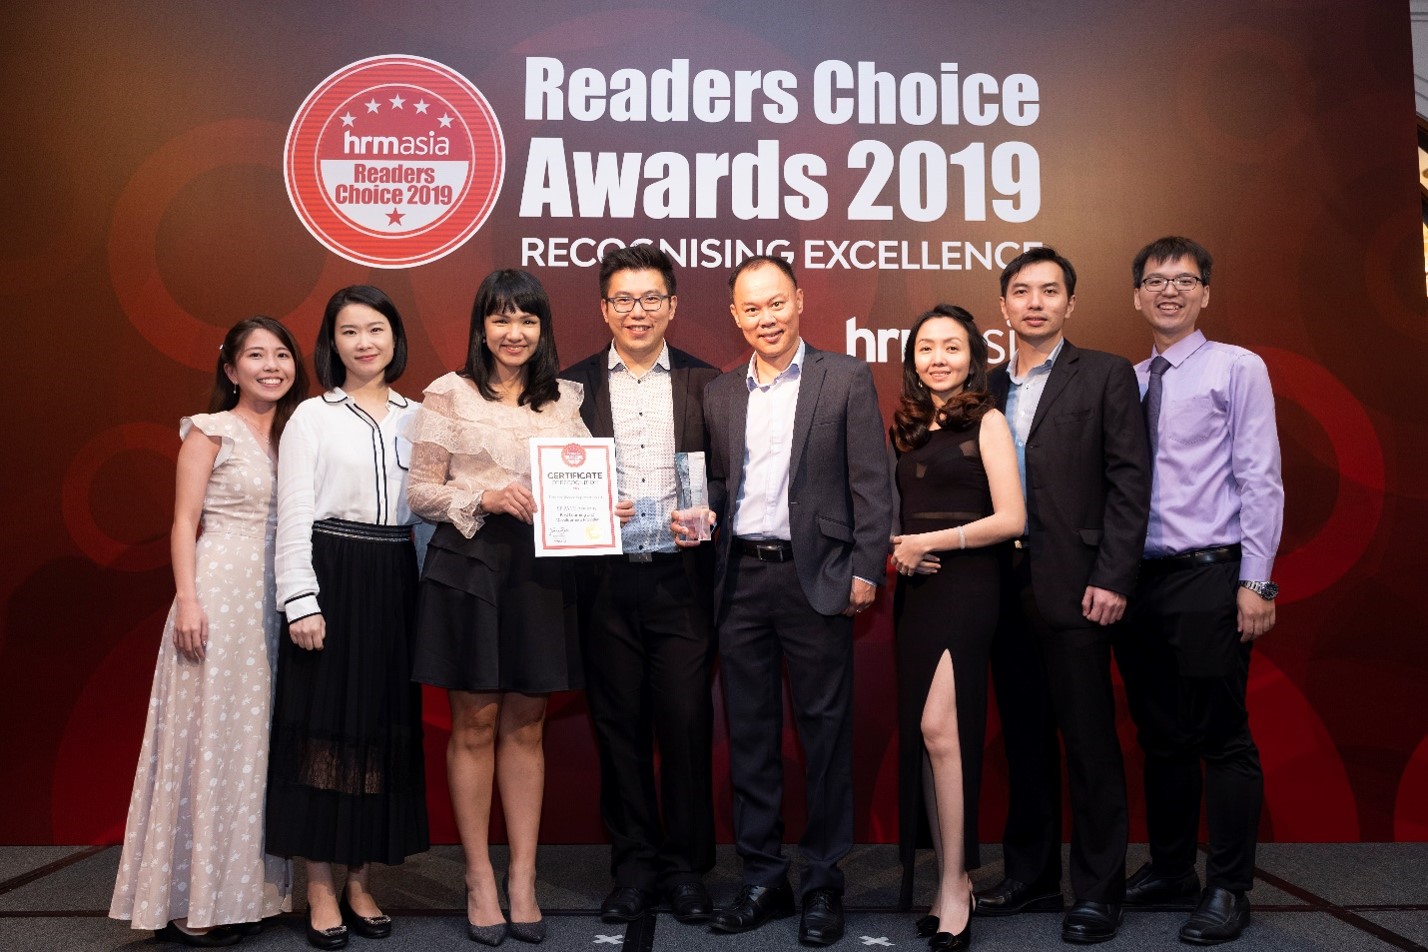 HRM Asia Readers Award_1